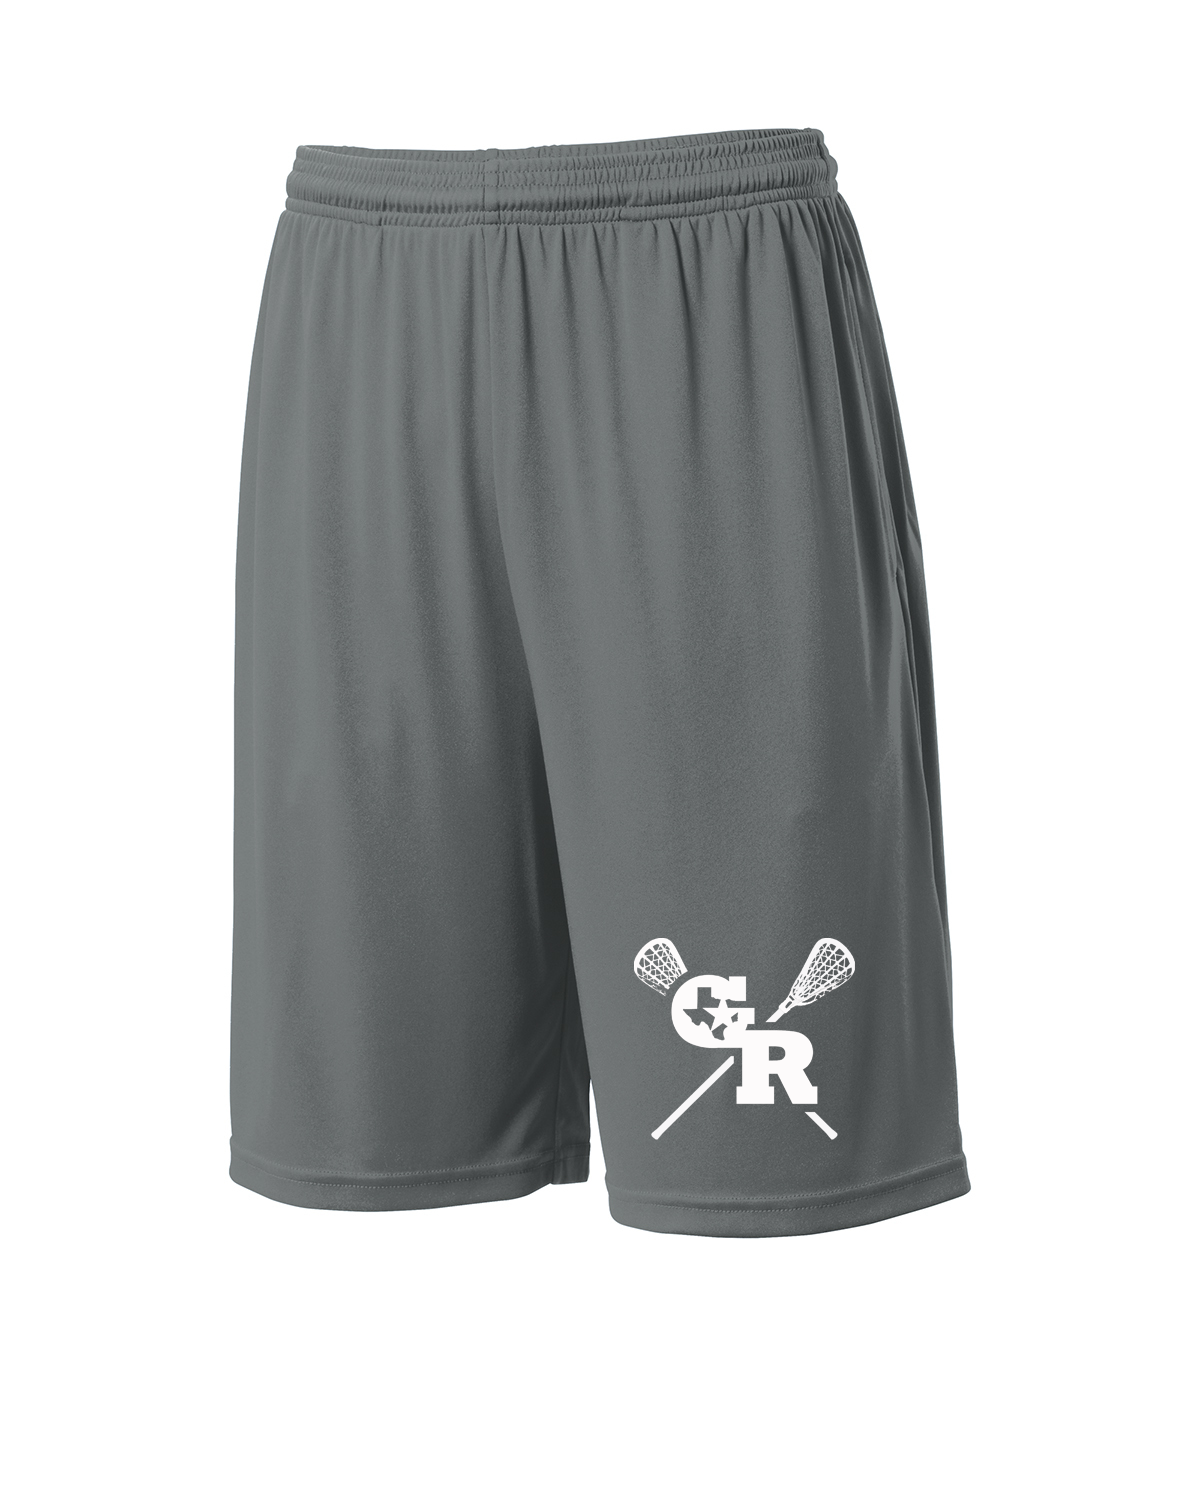 GR Longhorns Lacrosse Shorts